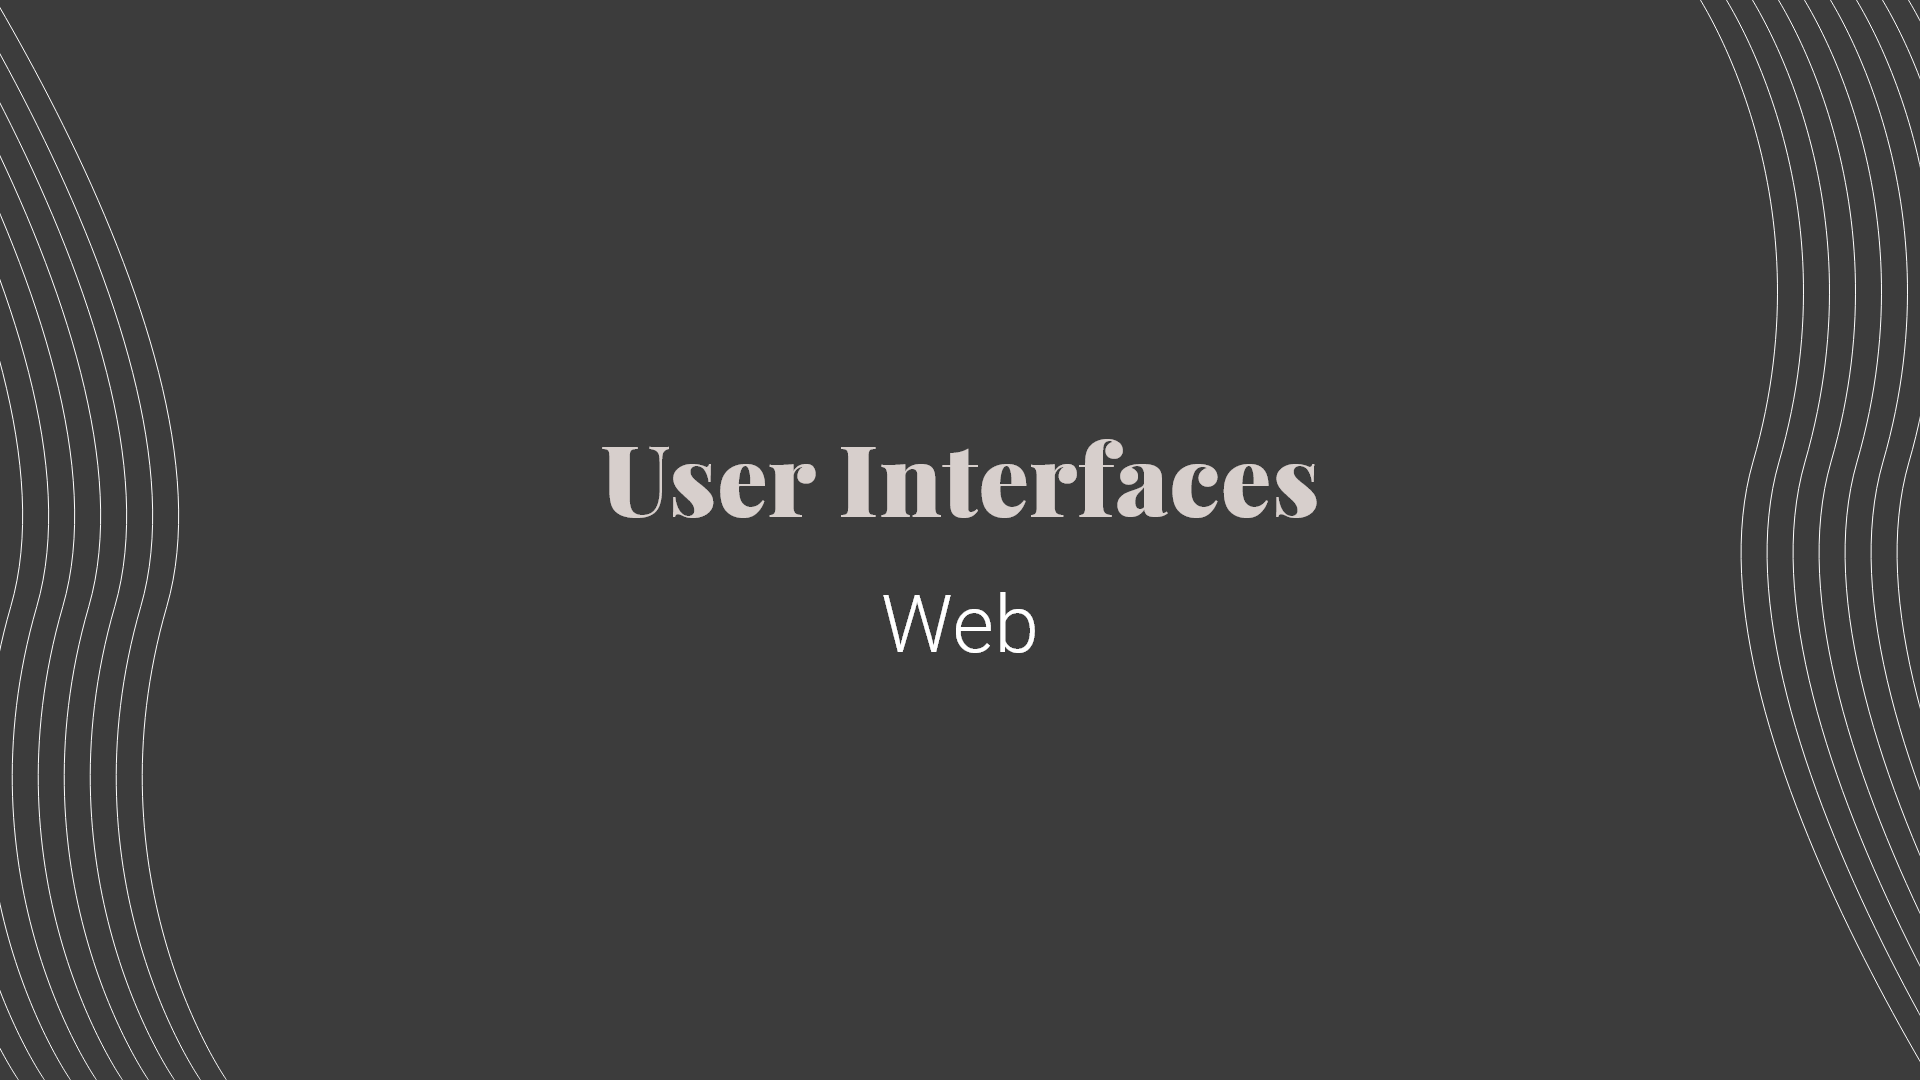 Web Interfaces